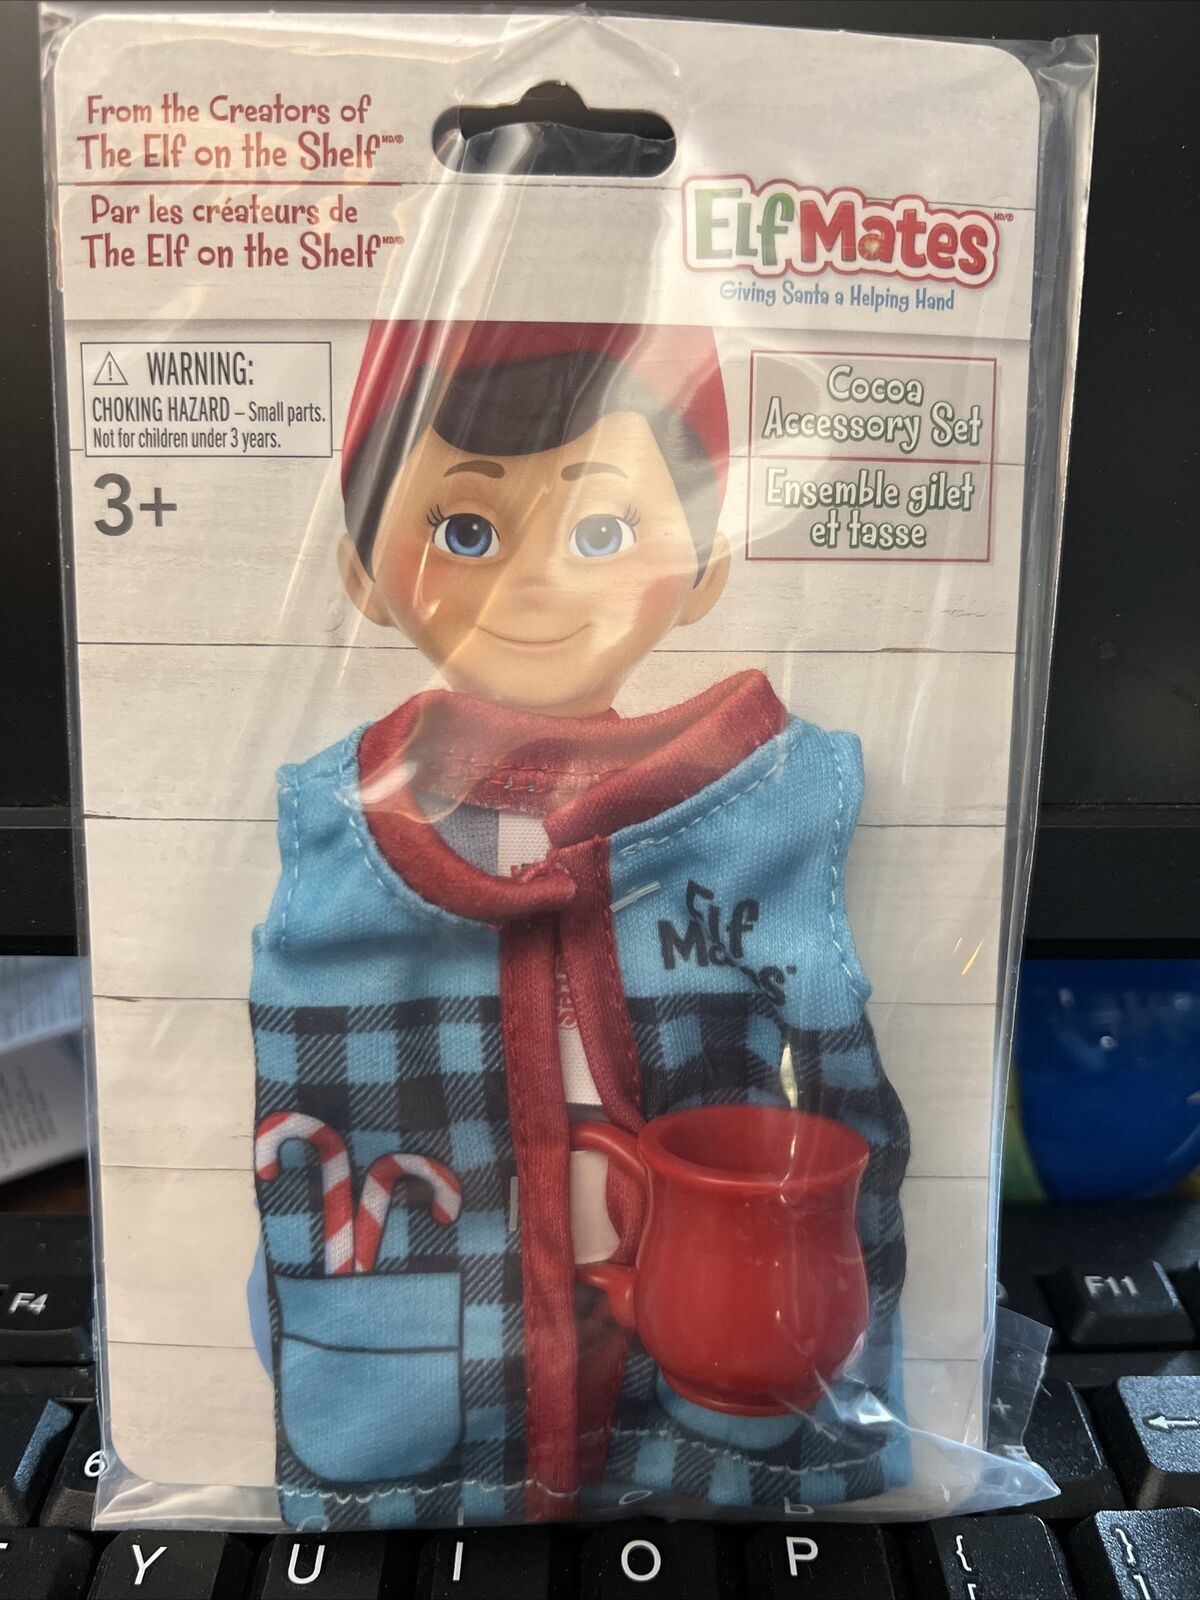 NEW Elf on the Shelf Elf Mates Cocoa Accessory Set Christmas Fun